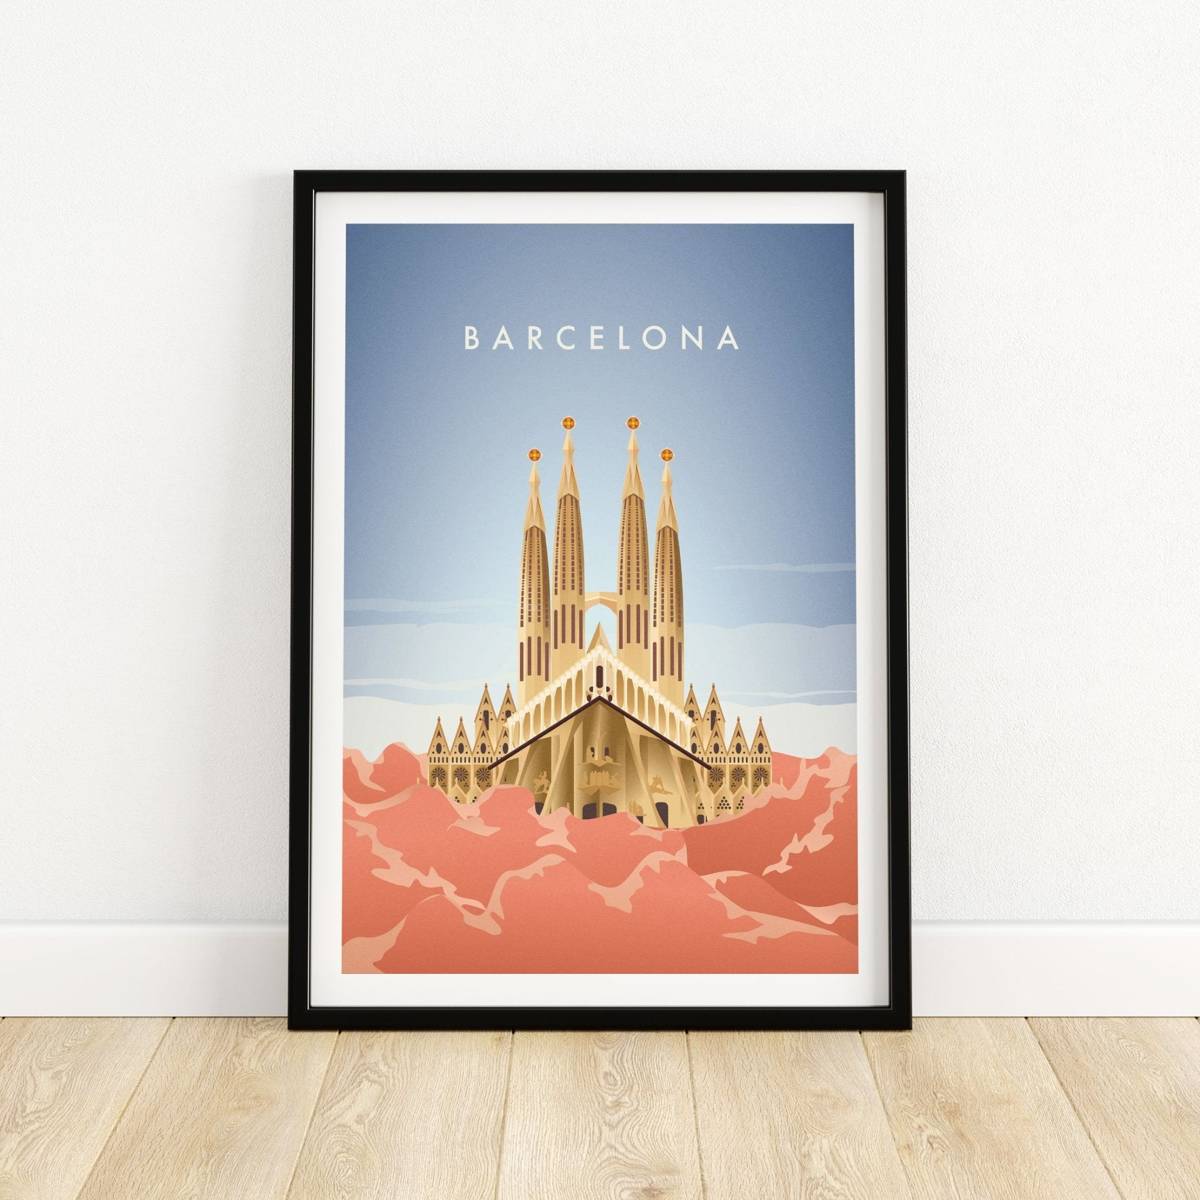 Barcelona Print - Travel Poster - Barcelona Wall Art - City Skyline ...